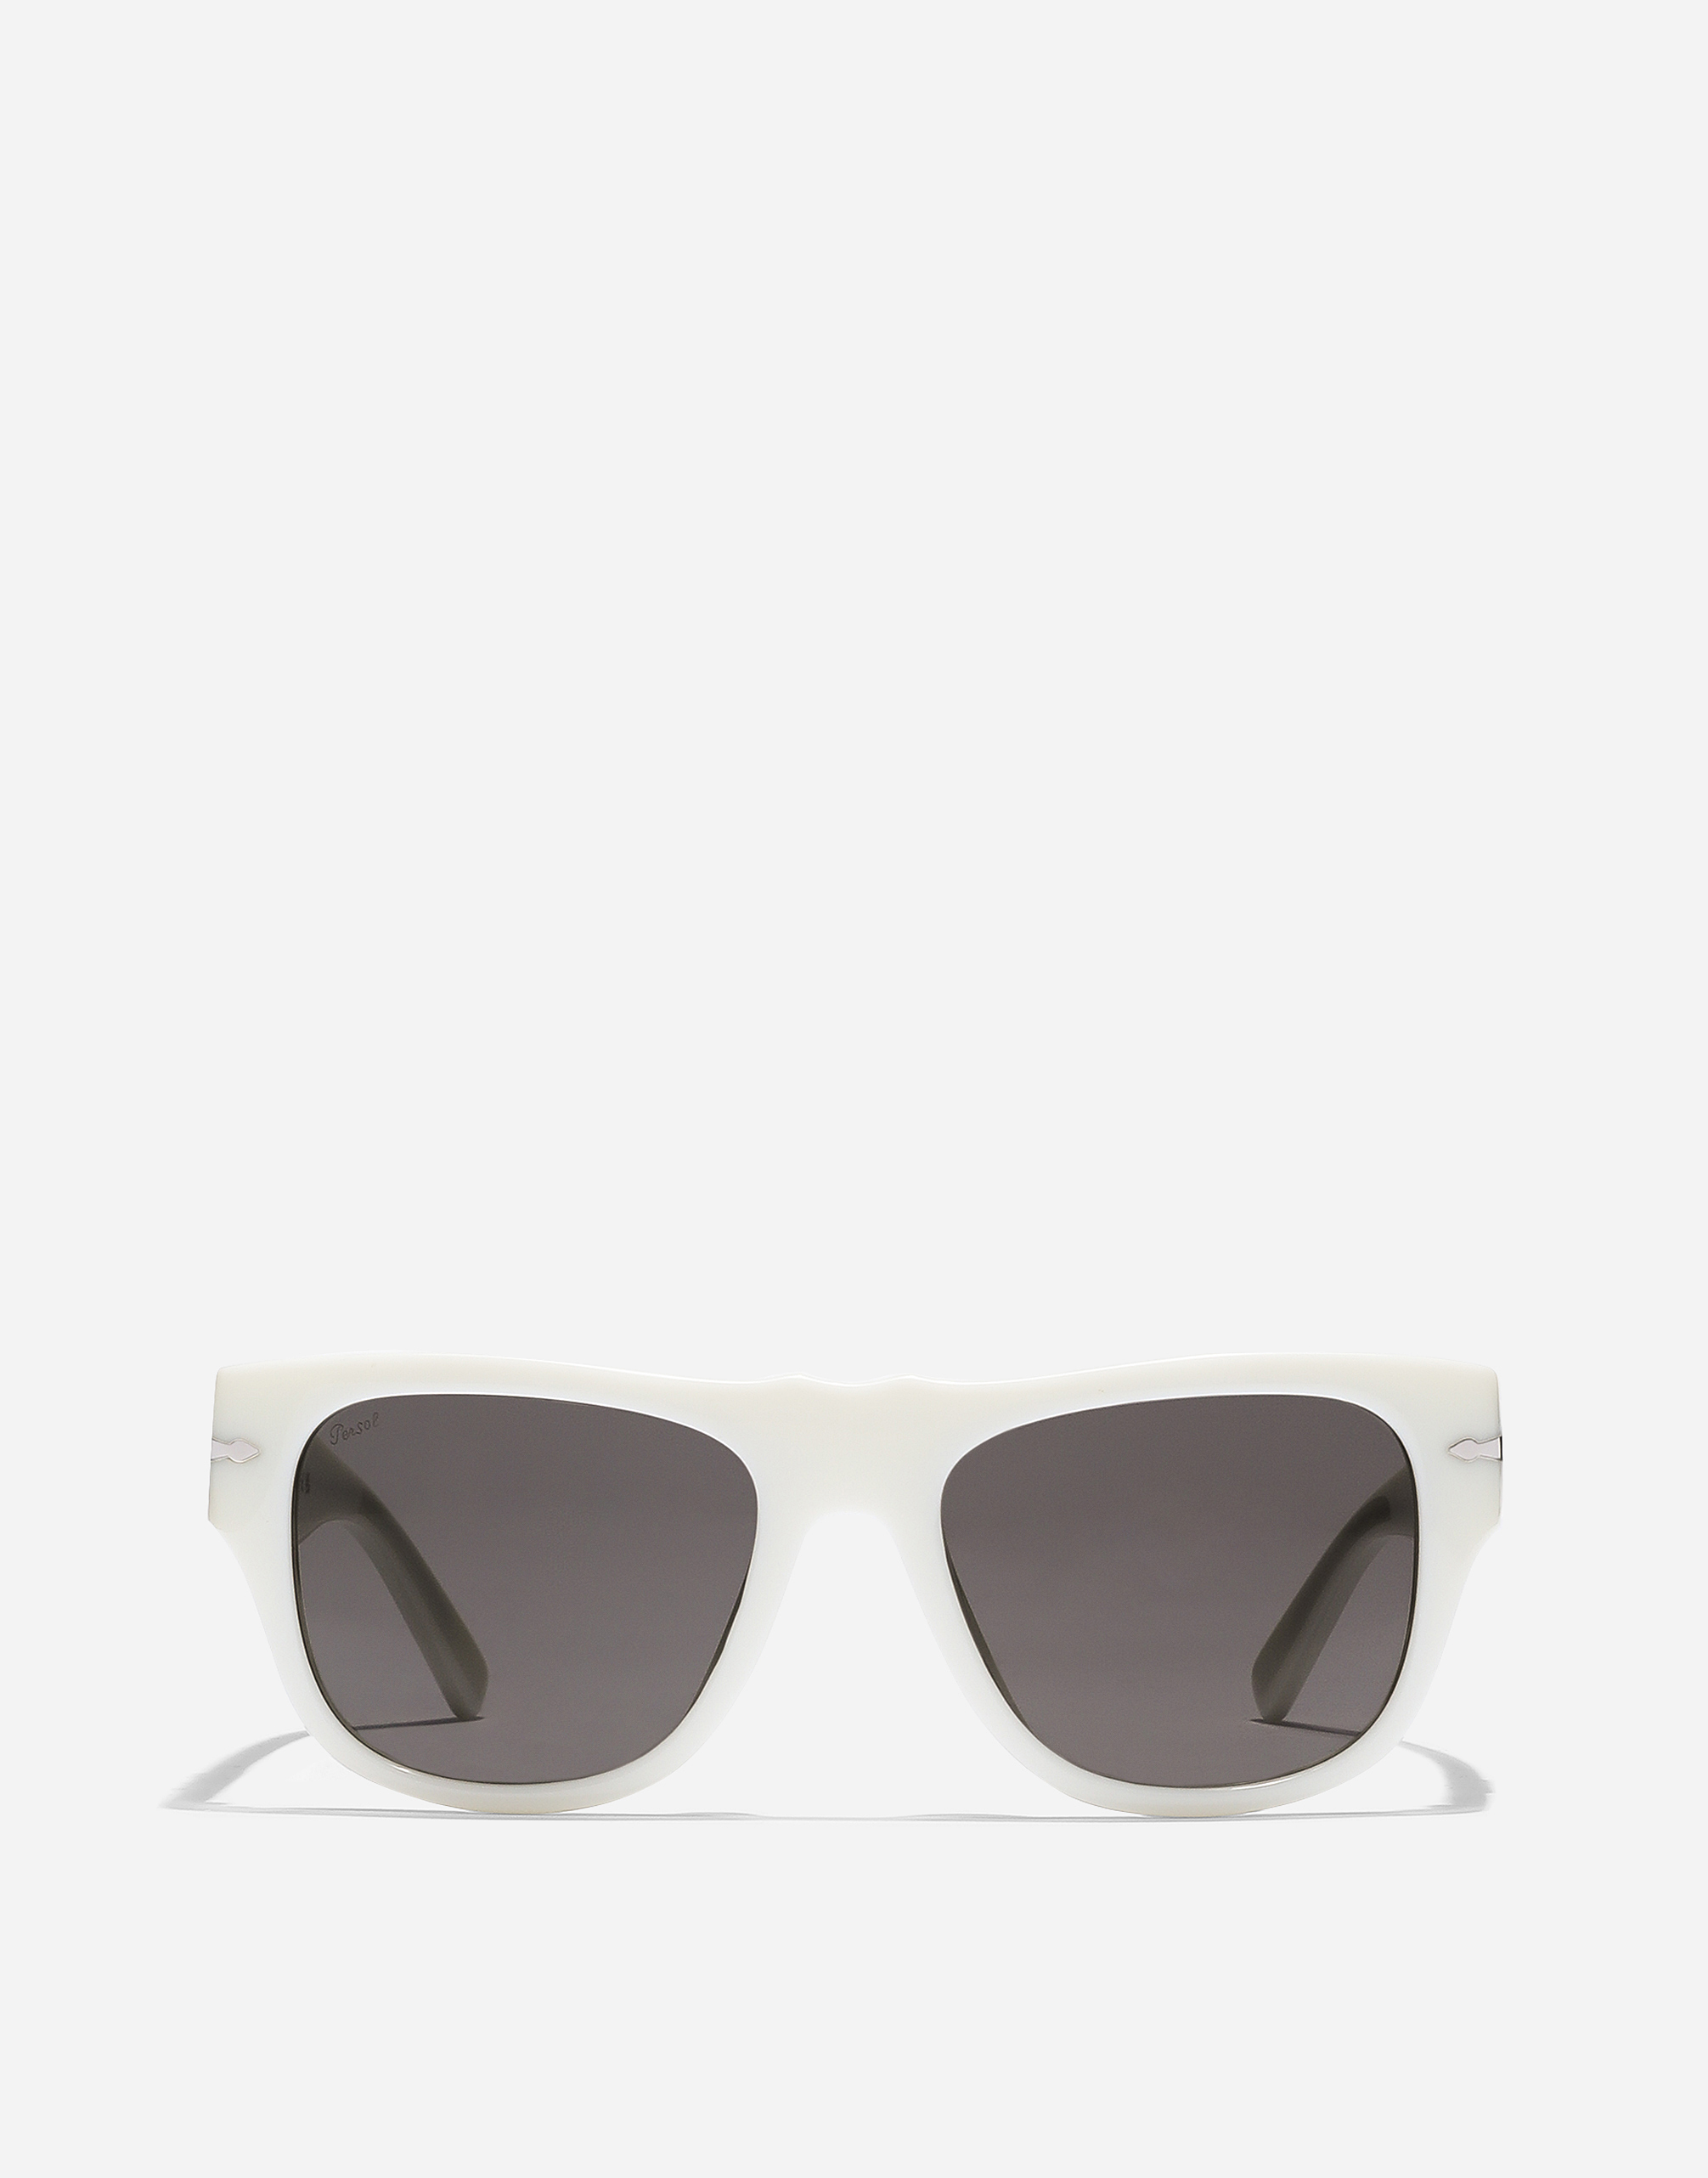 Dolce&Gabbana x Persol sunglasses in ivory